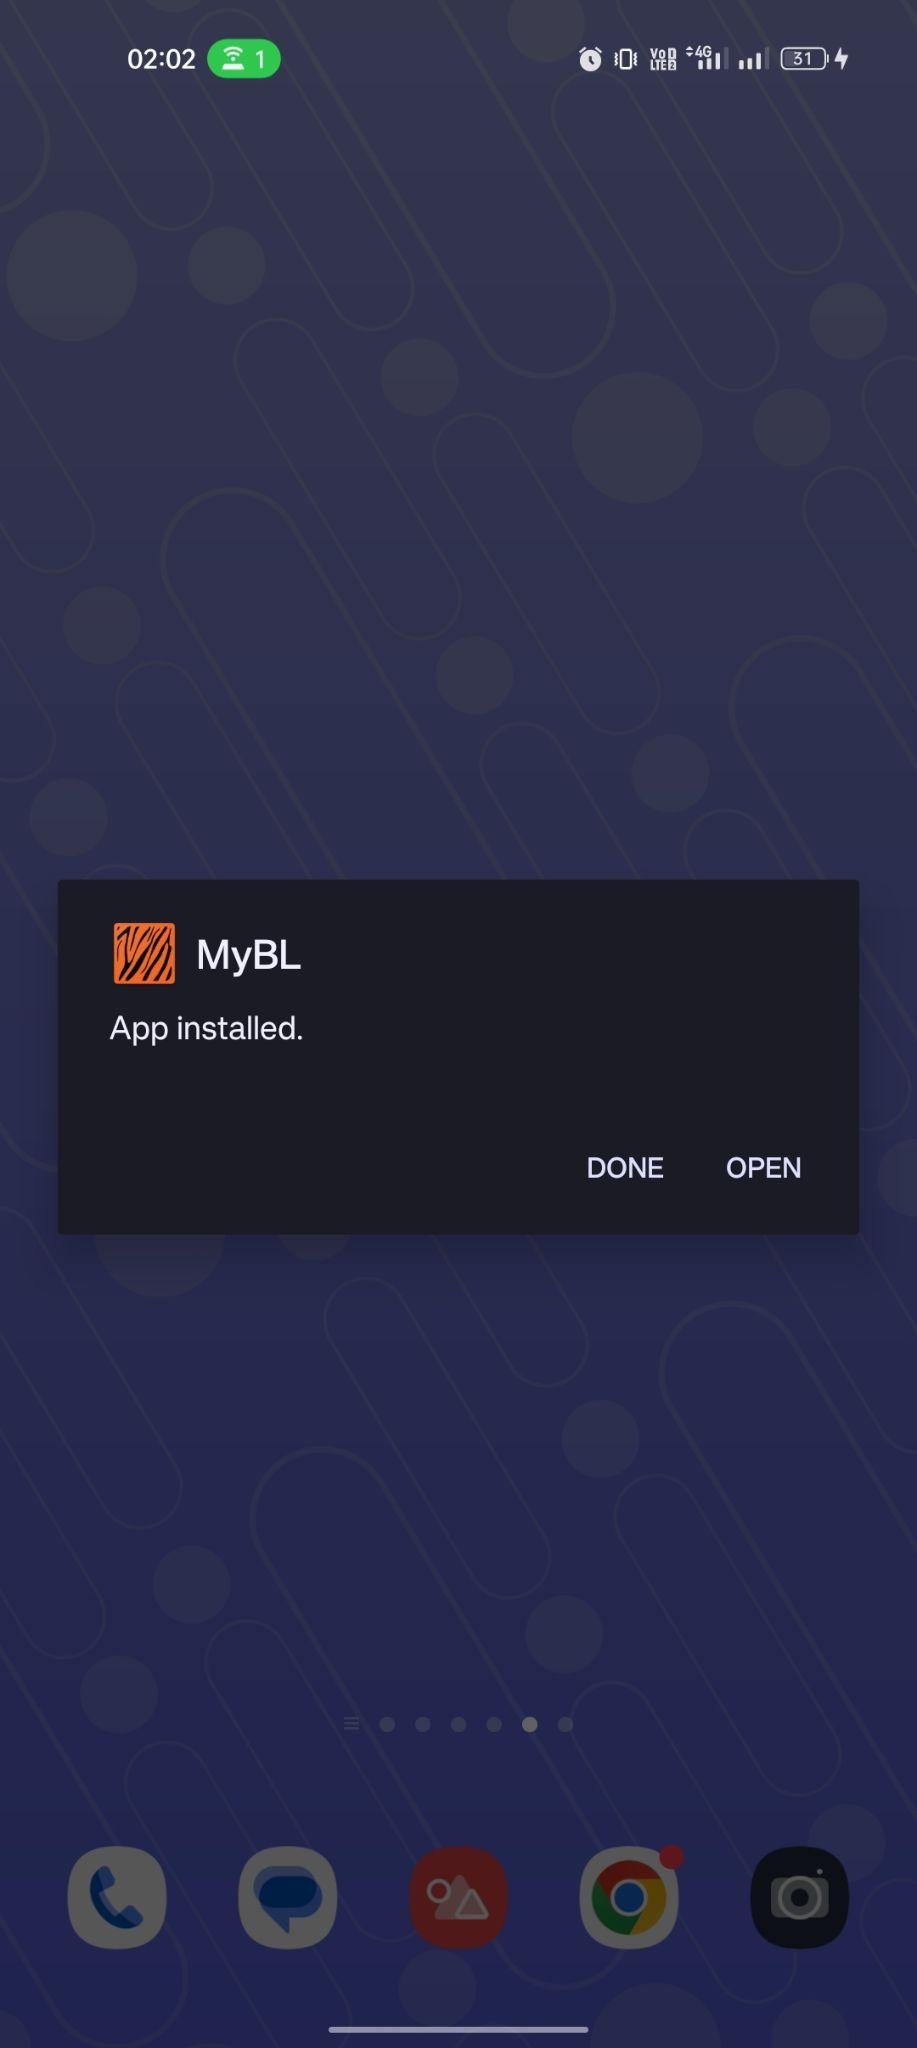 MyBL apk installed